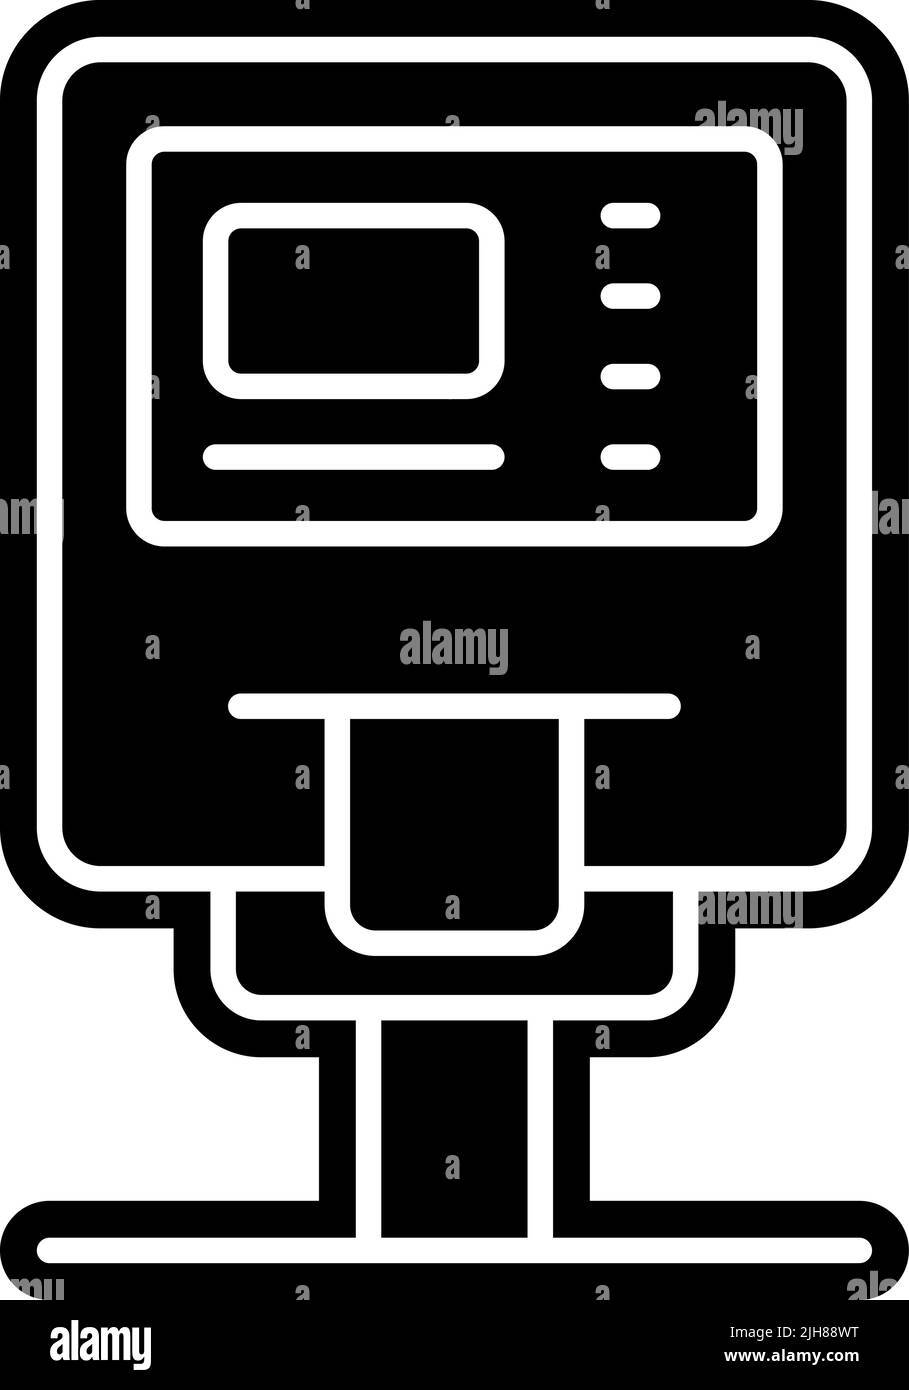 Smart city parking meter icon Stock Vector